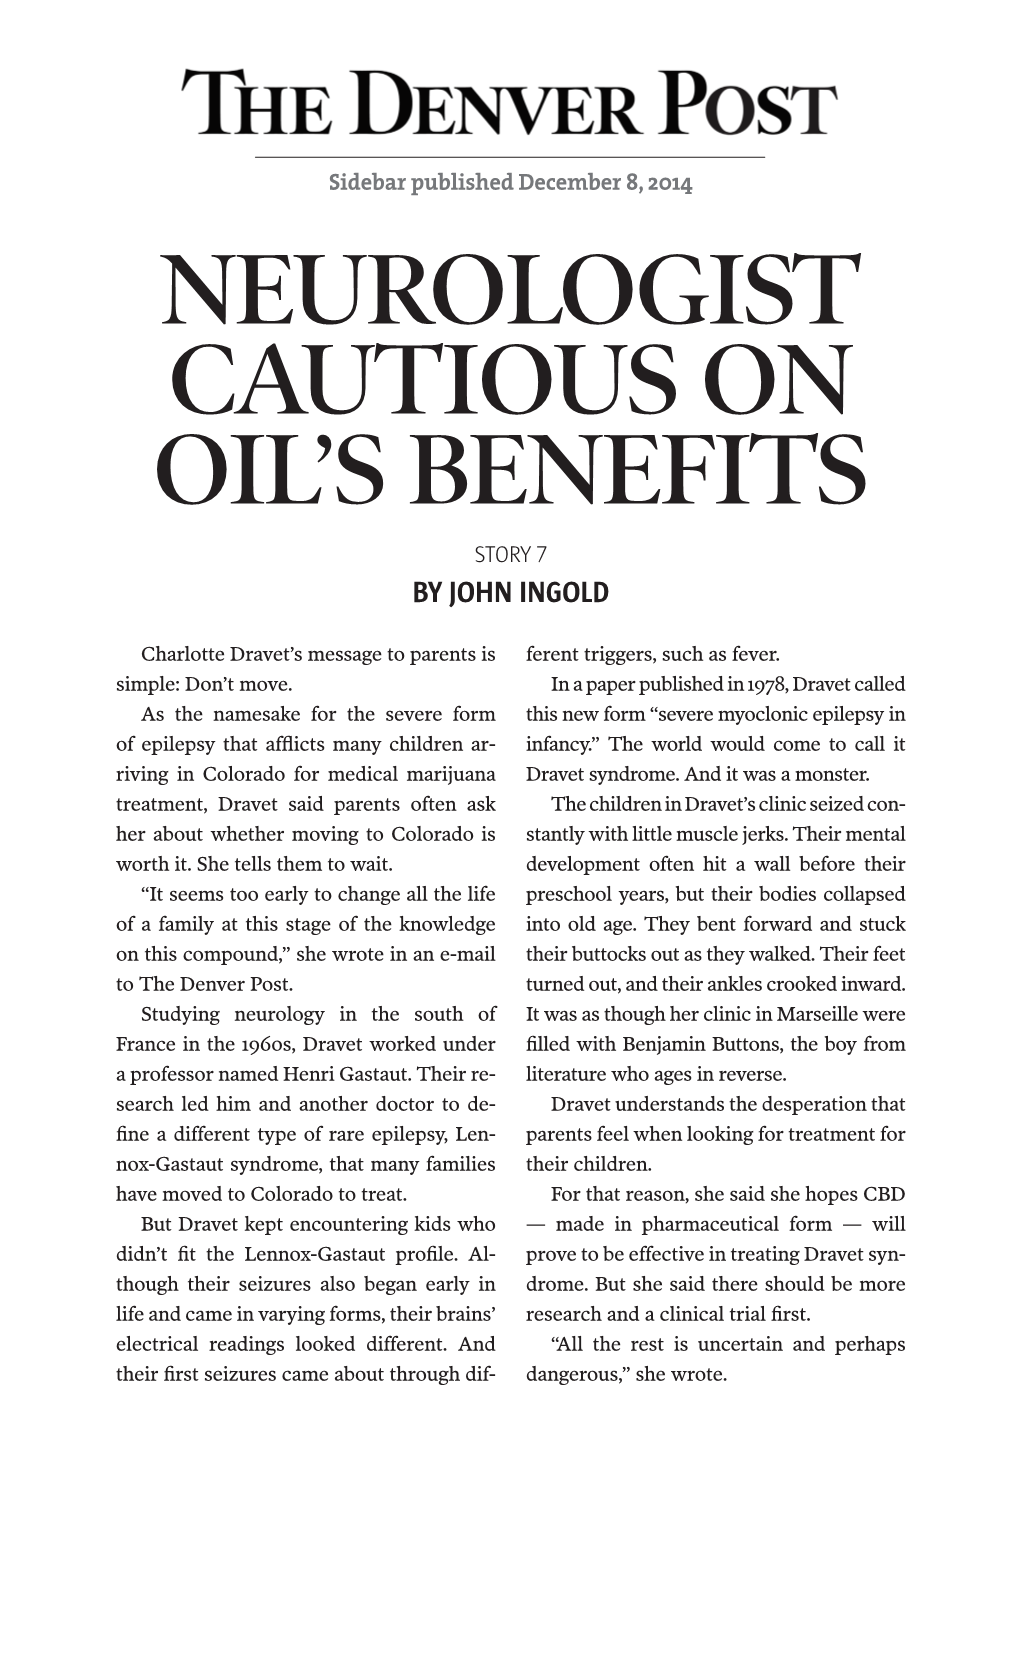 Neurologist Cautious on Oil's Benefits